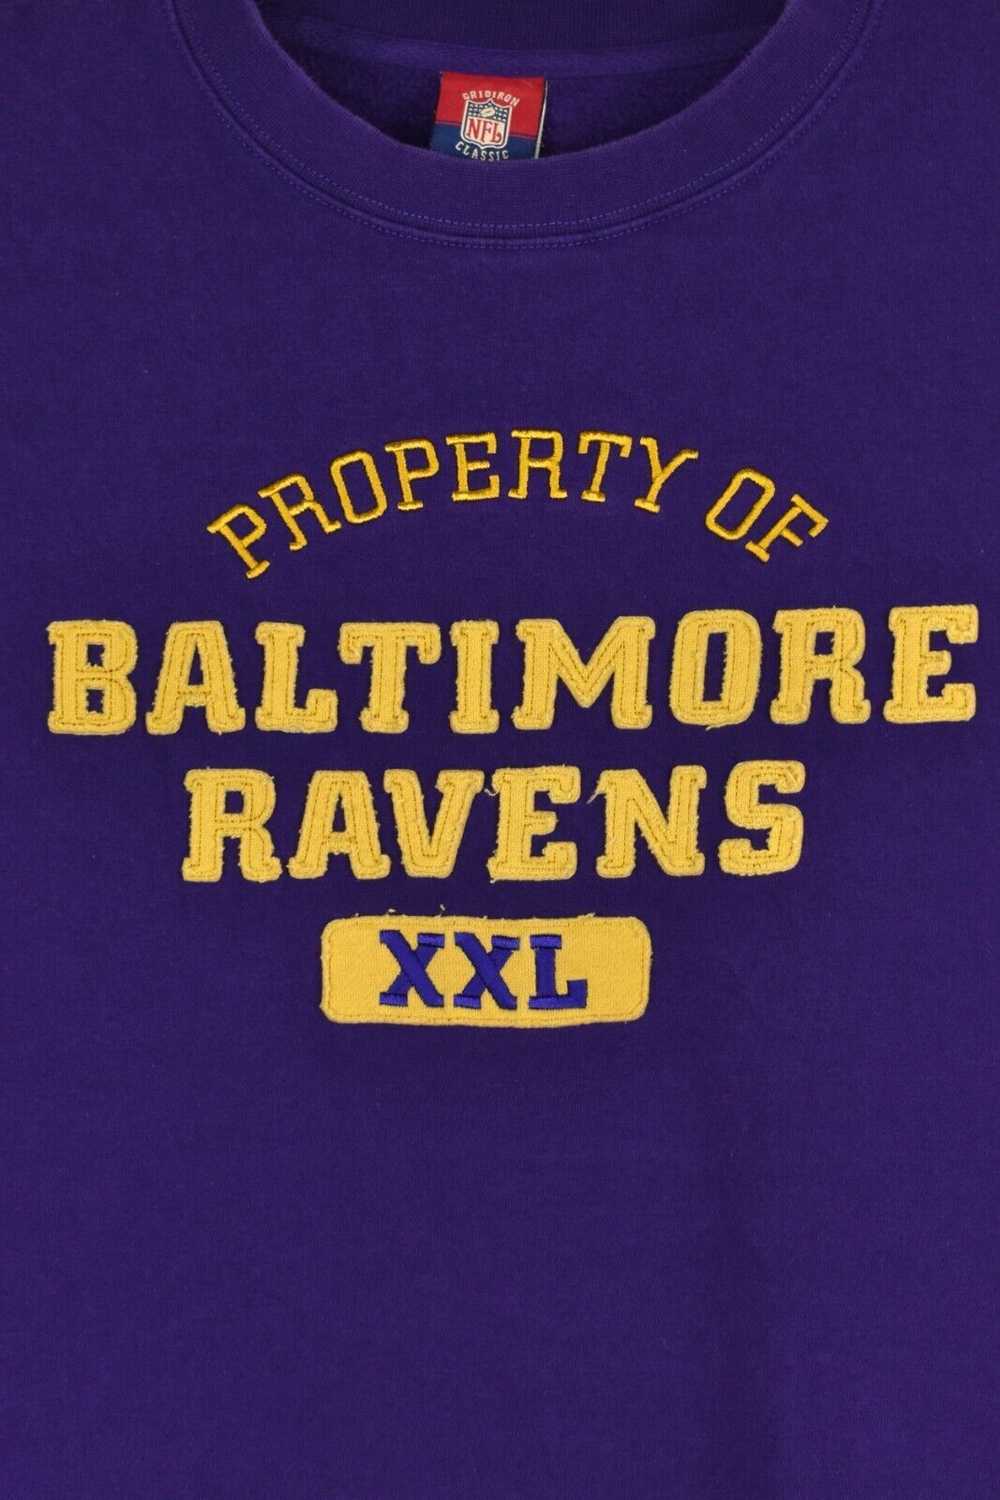 NFL Vintage Baltimore Ravens sweatshirt (L), purp… - image 2